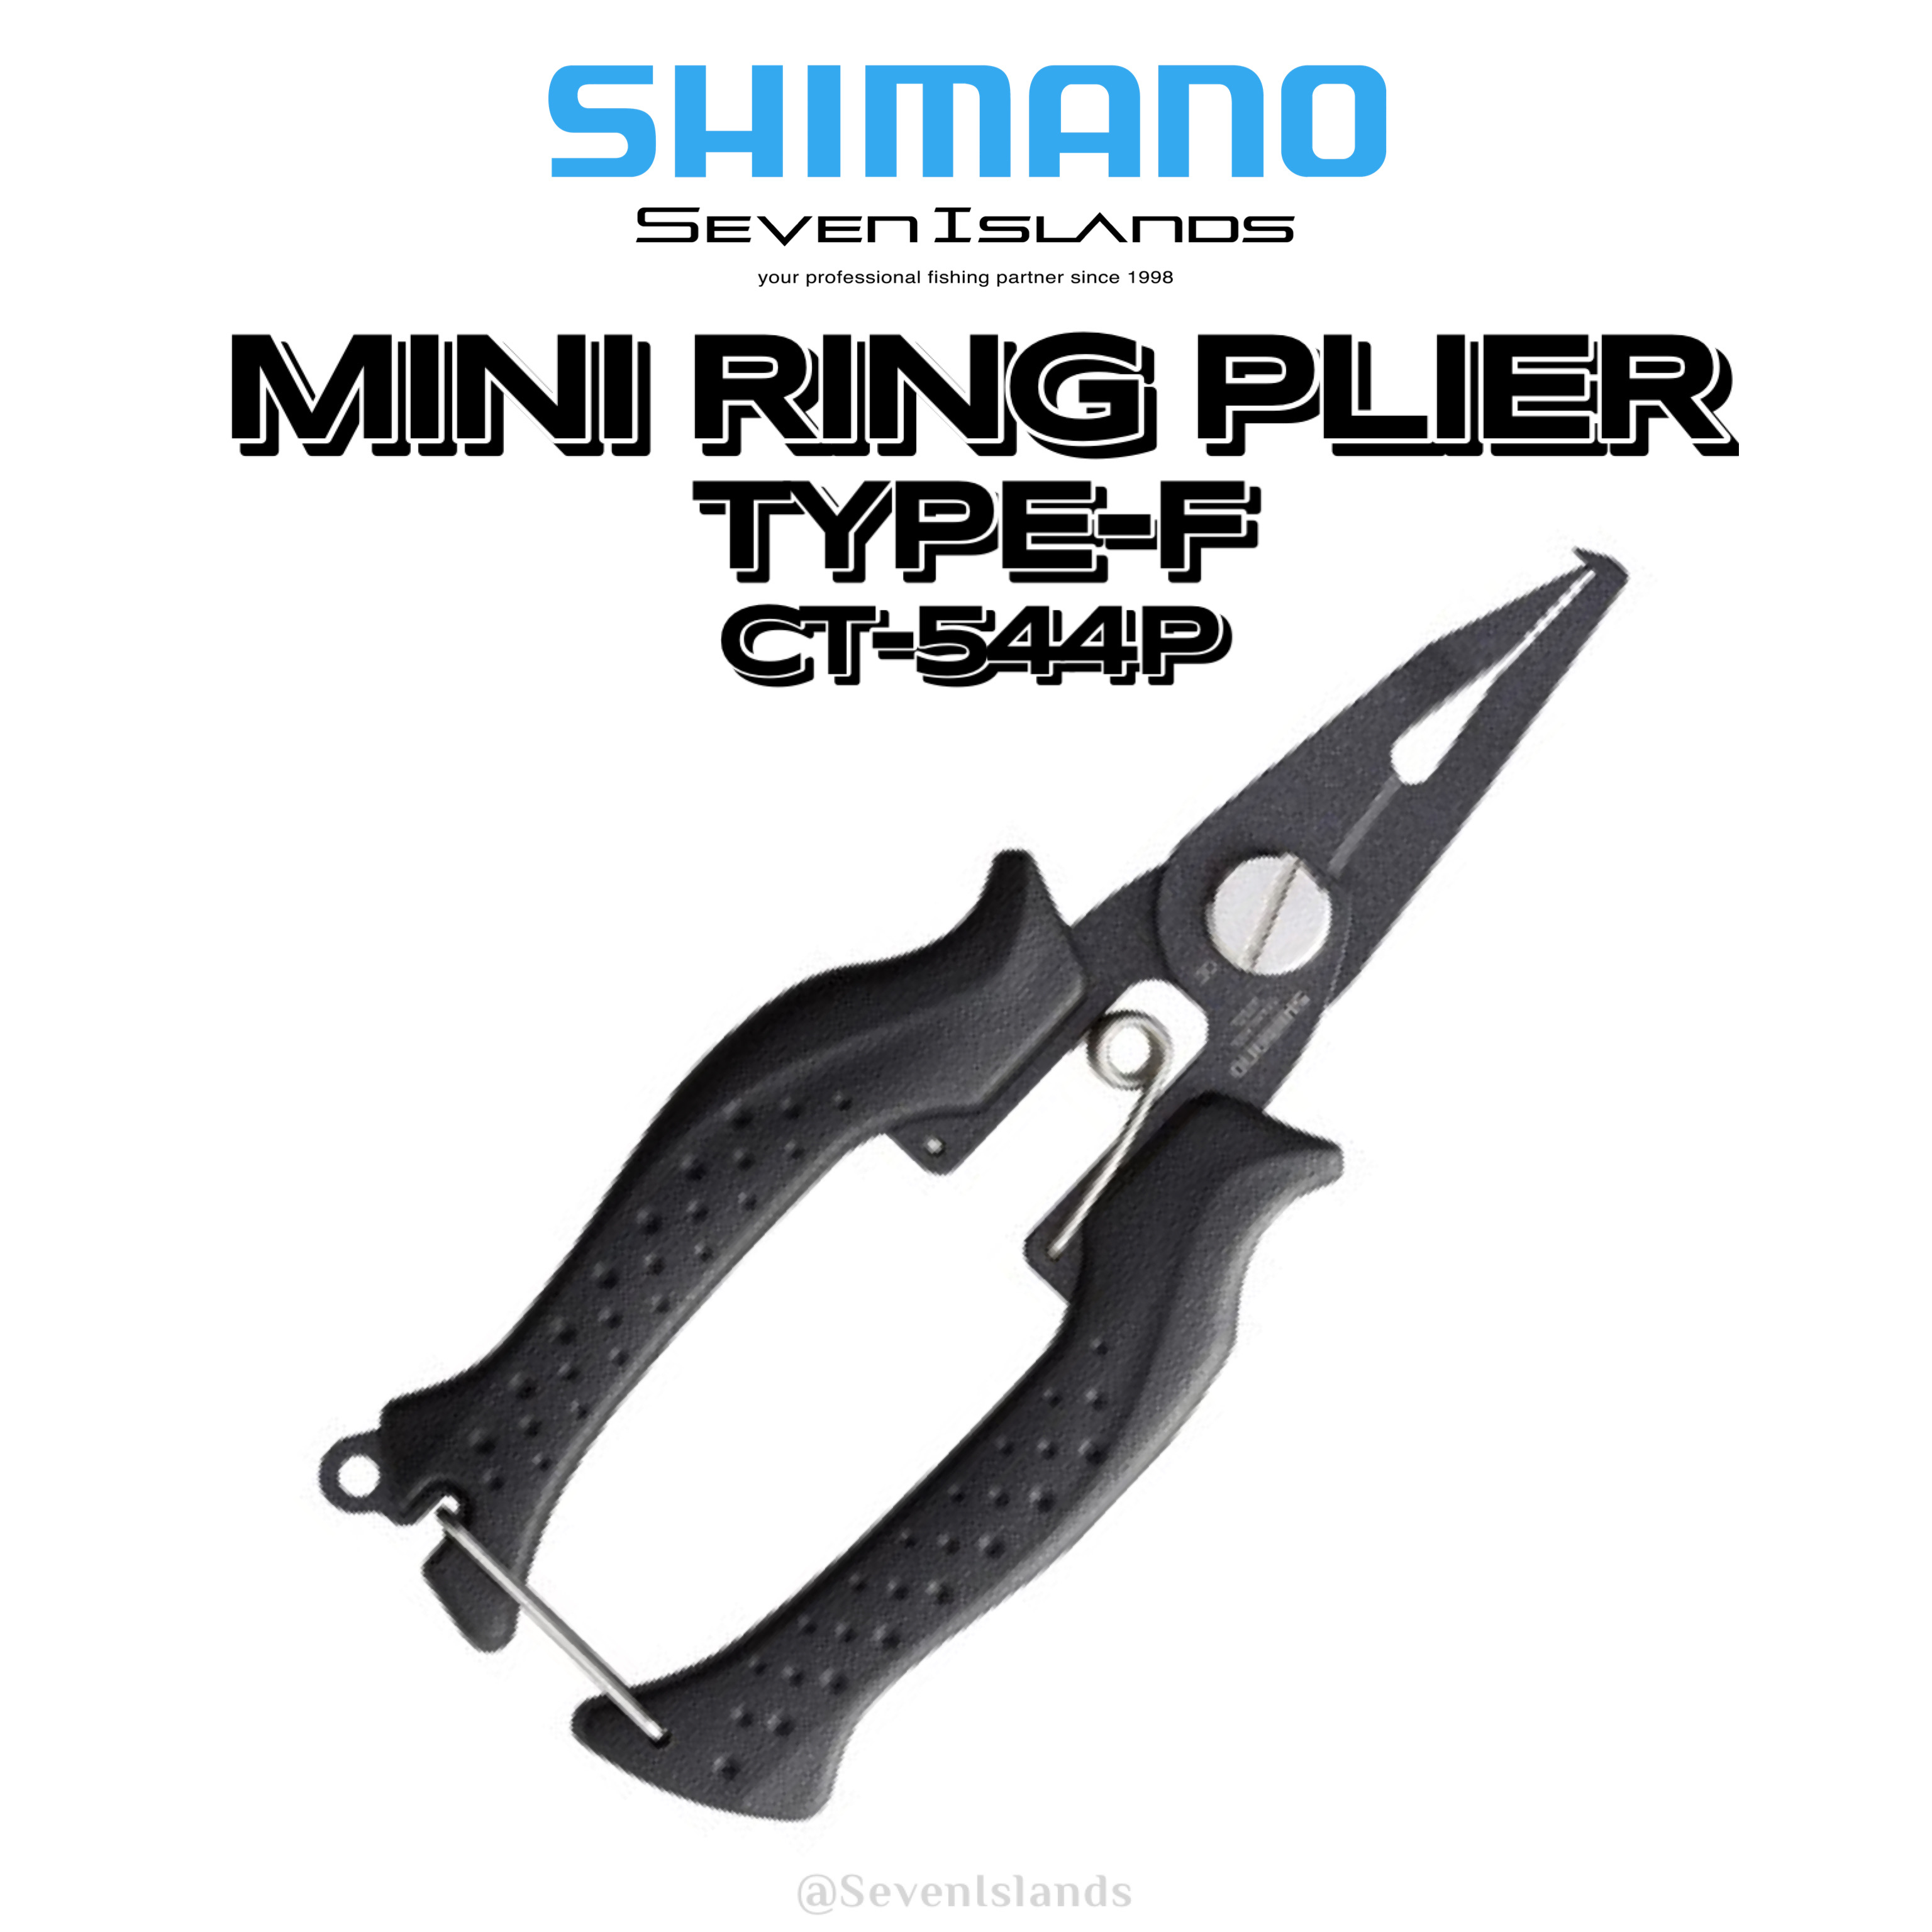 SHIMANO MINI RING PLIER TYPE-F CT-544P